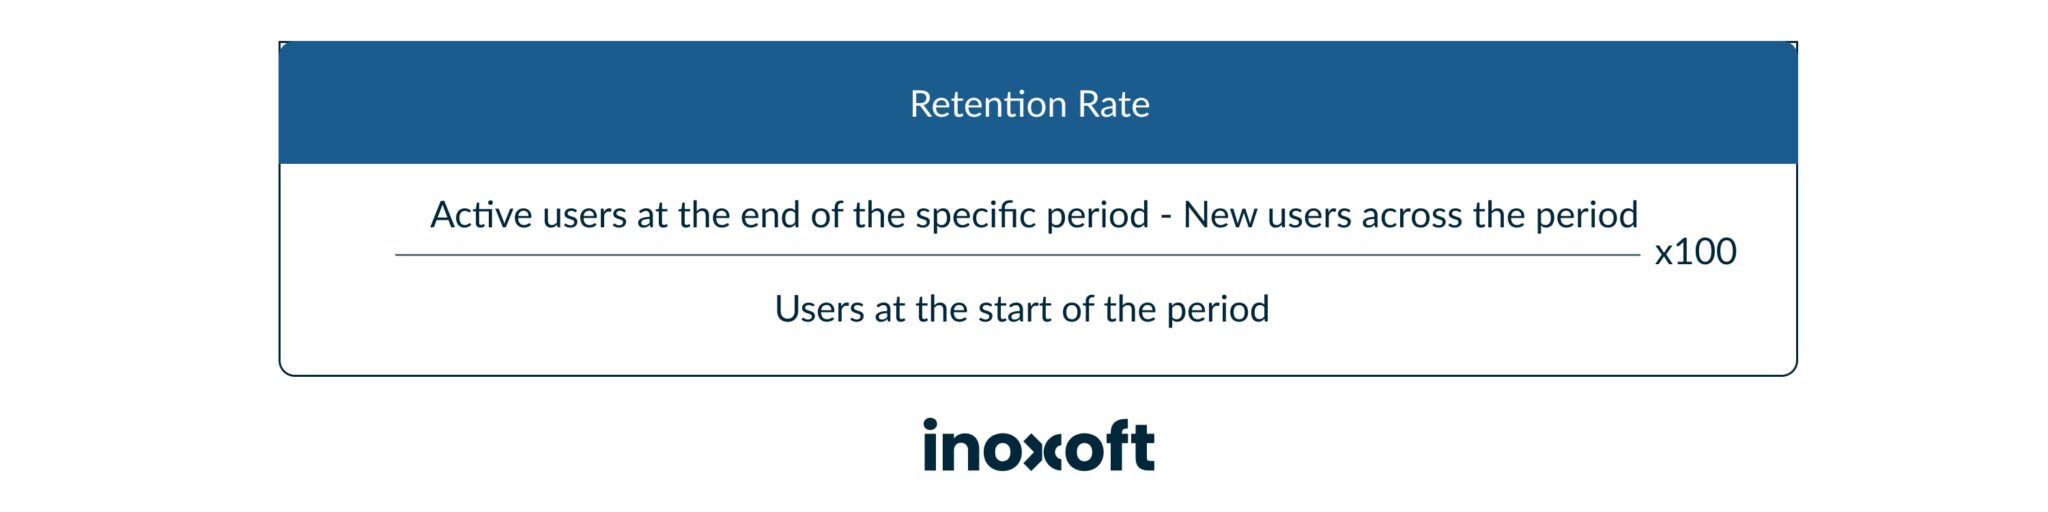 Retention rate metric formula